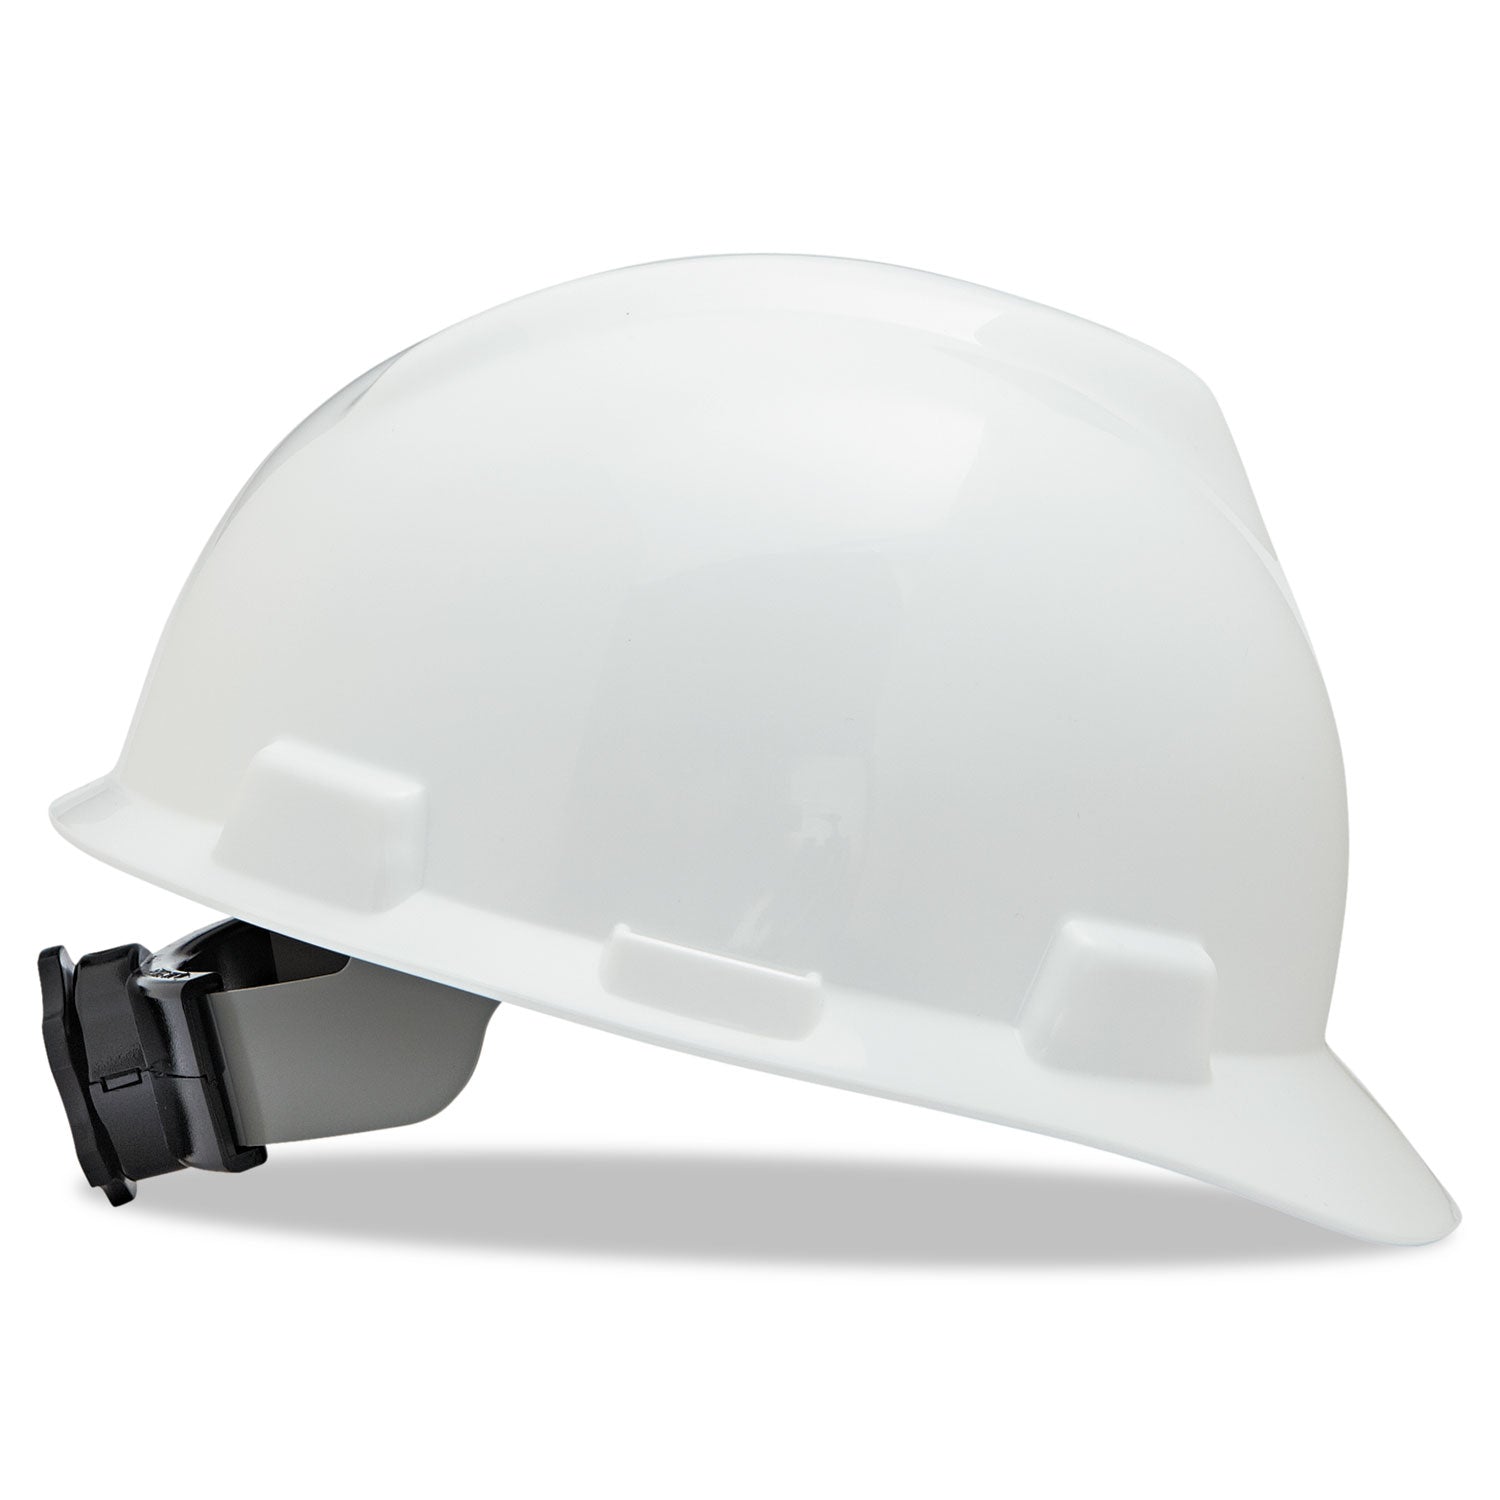 V-Gard Hard Hats, Ratchet Suspension, Size 6.5 to 8, White - 